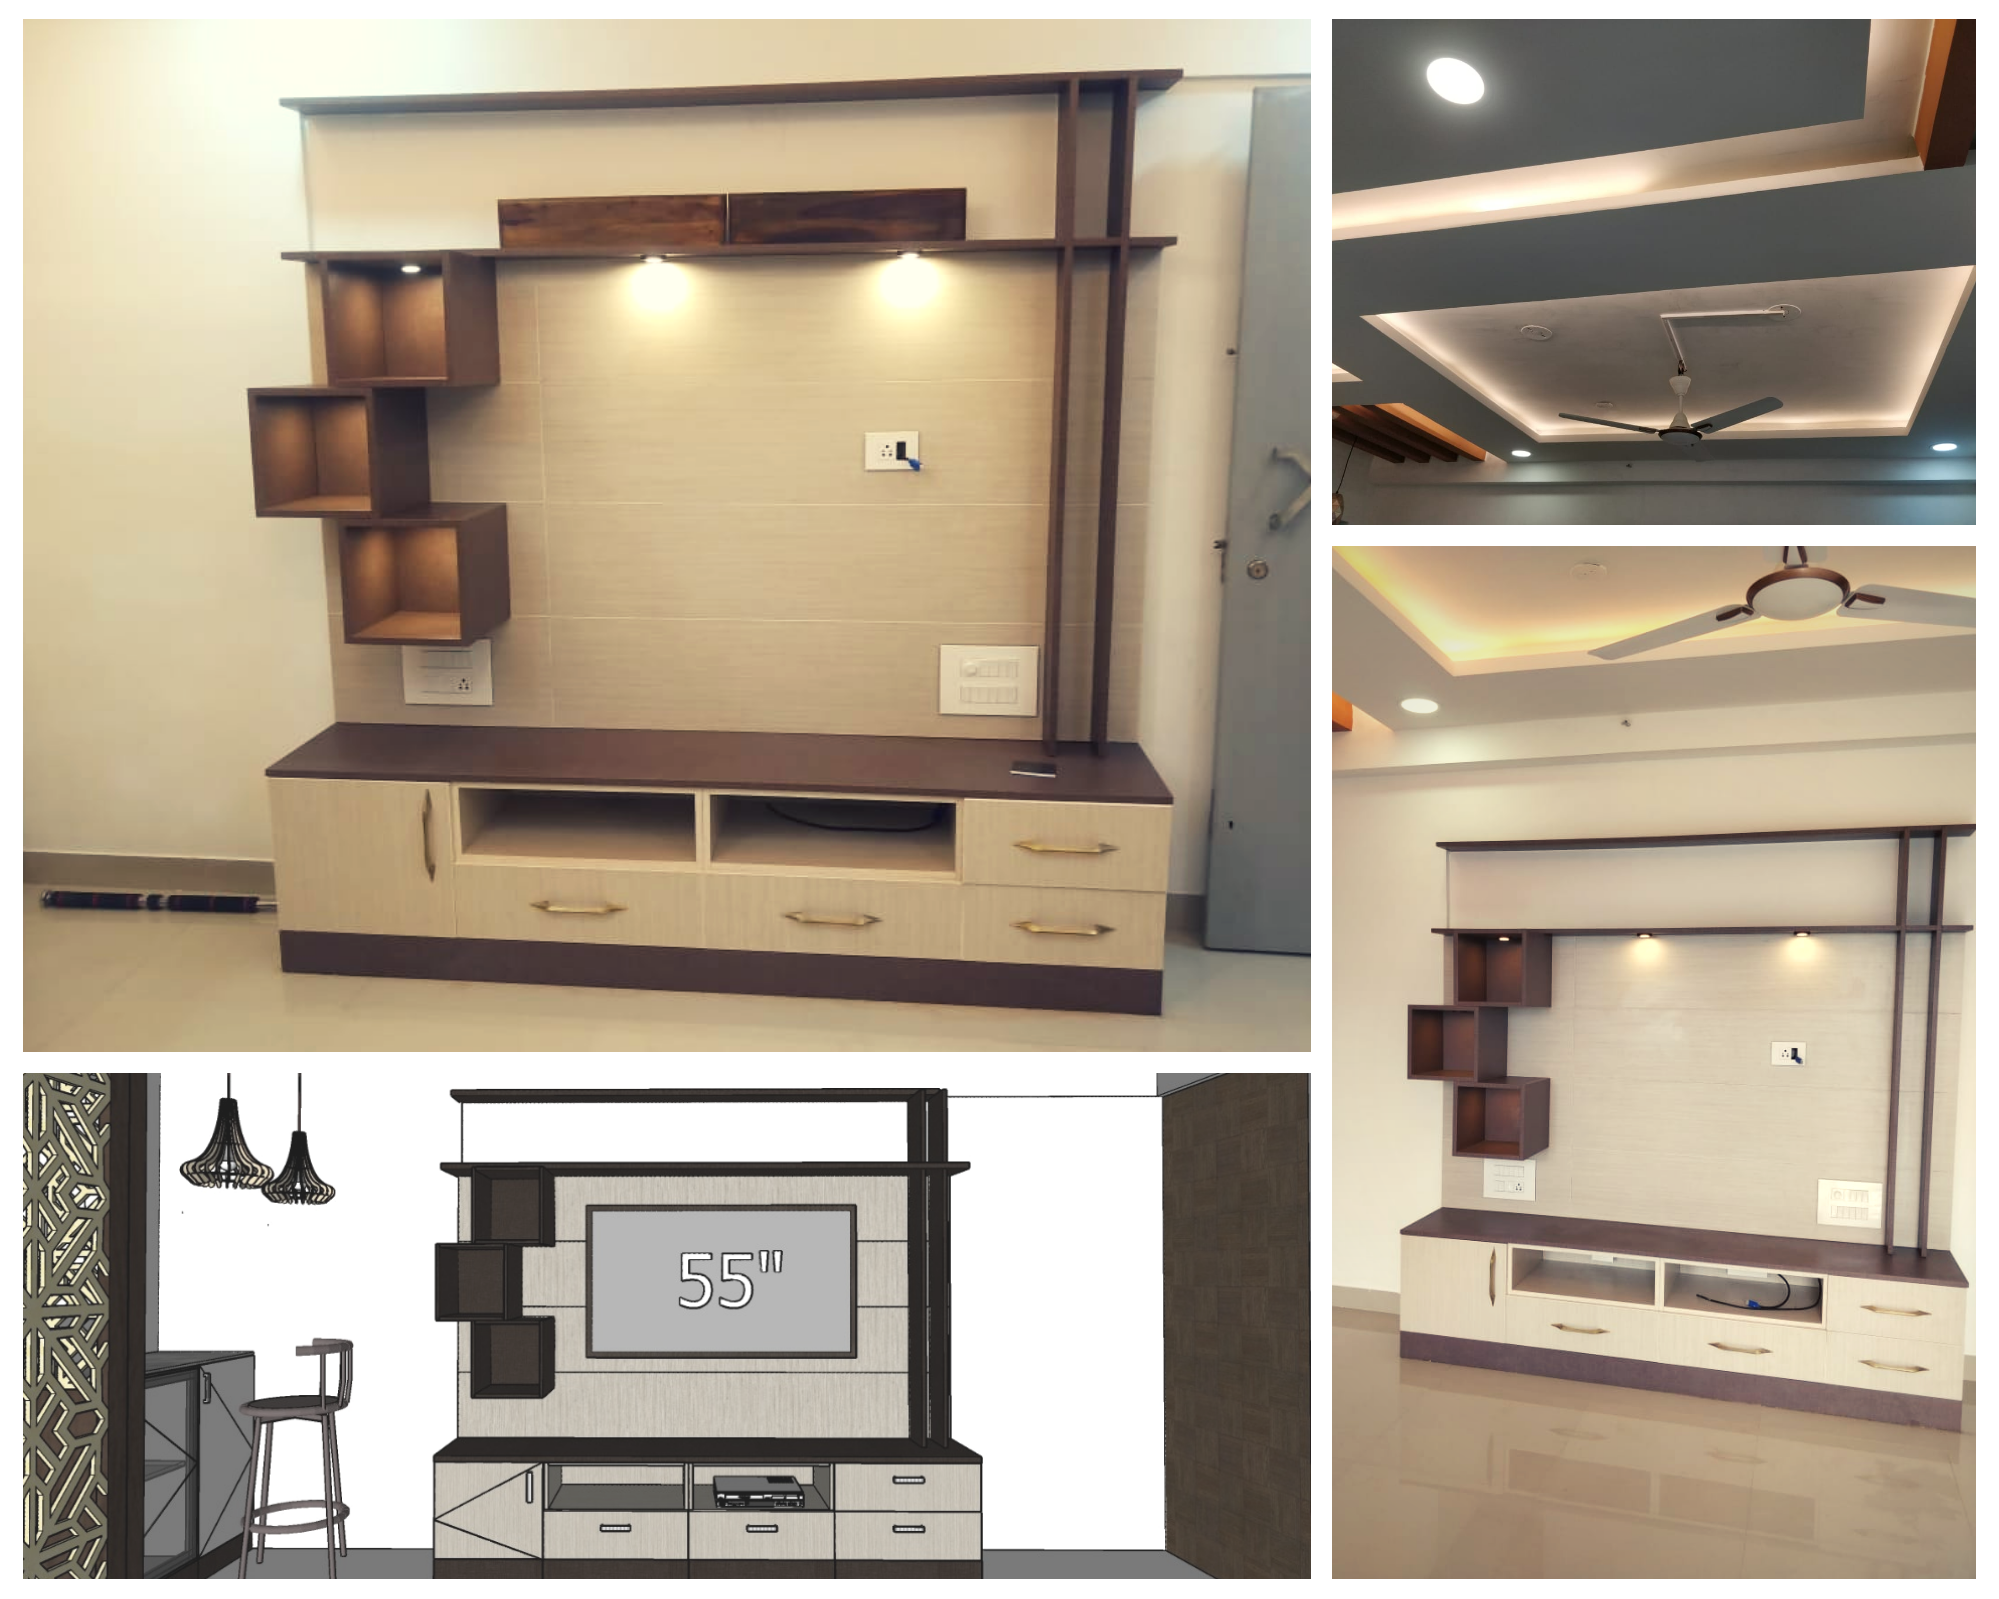 Vw design studio – Service Provider in Pune - KreateCube